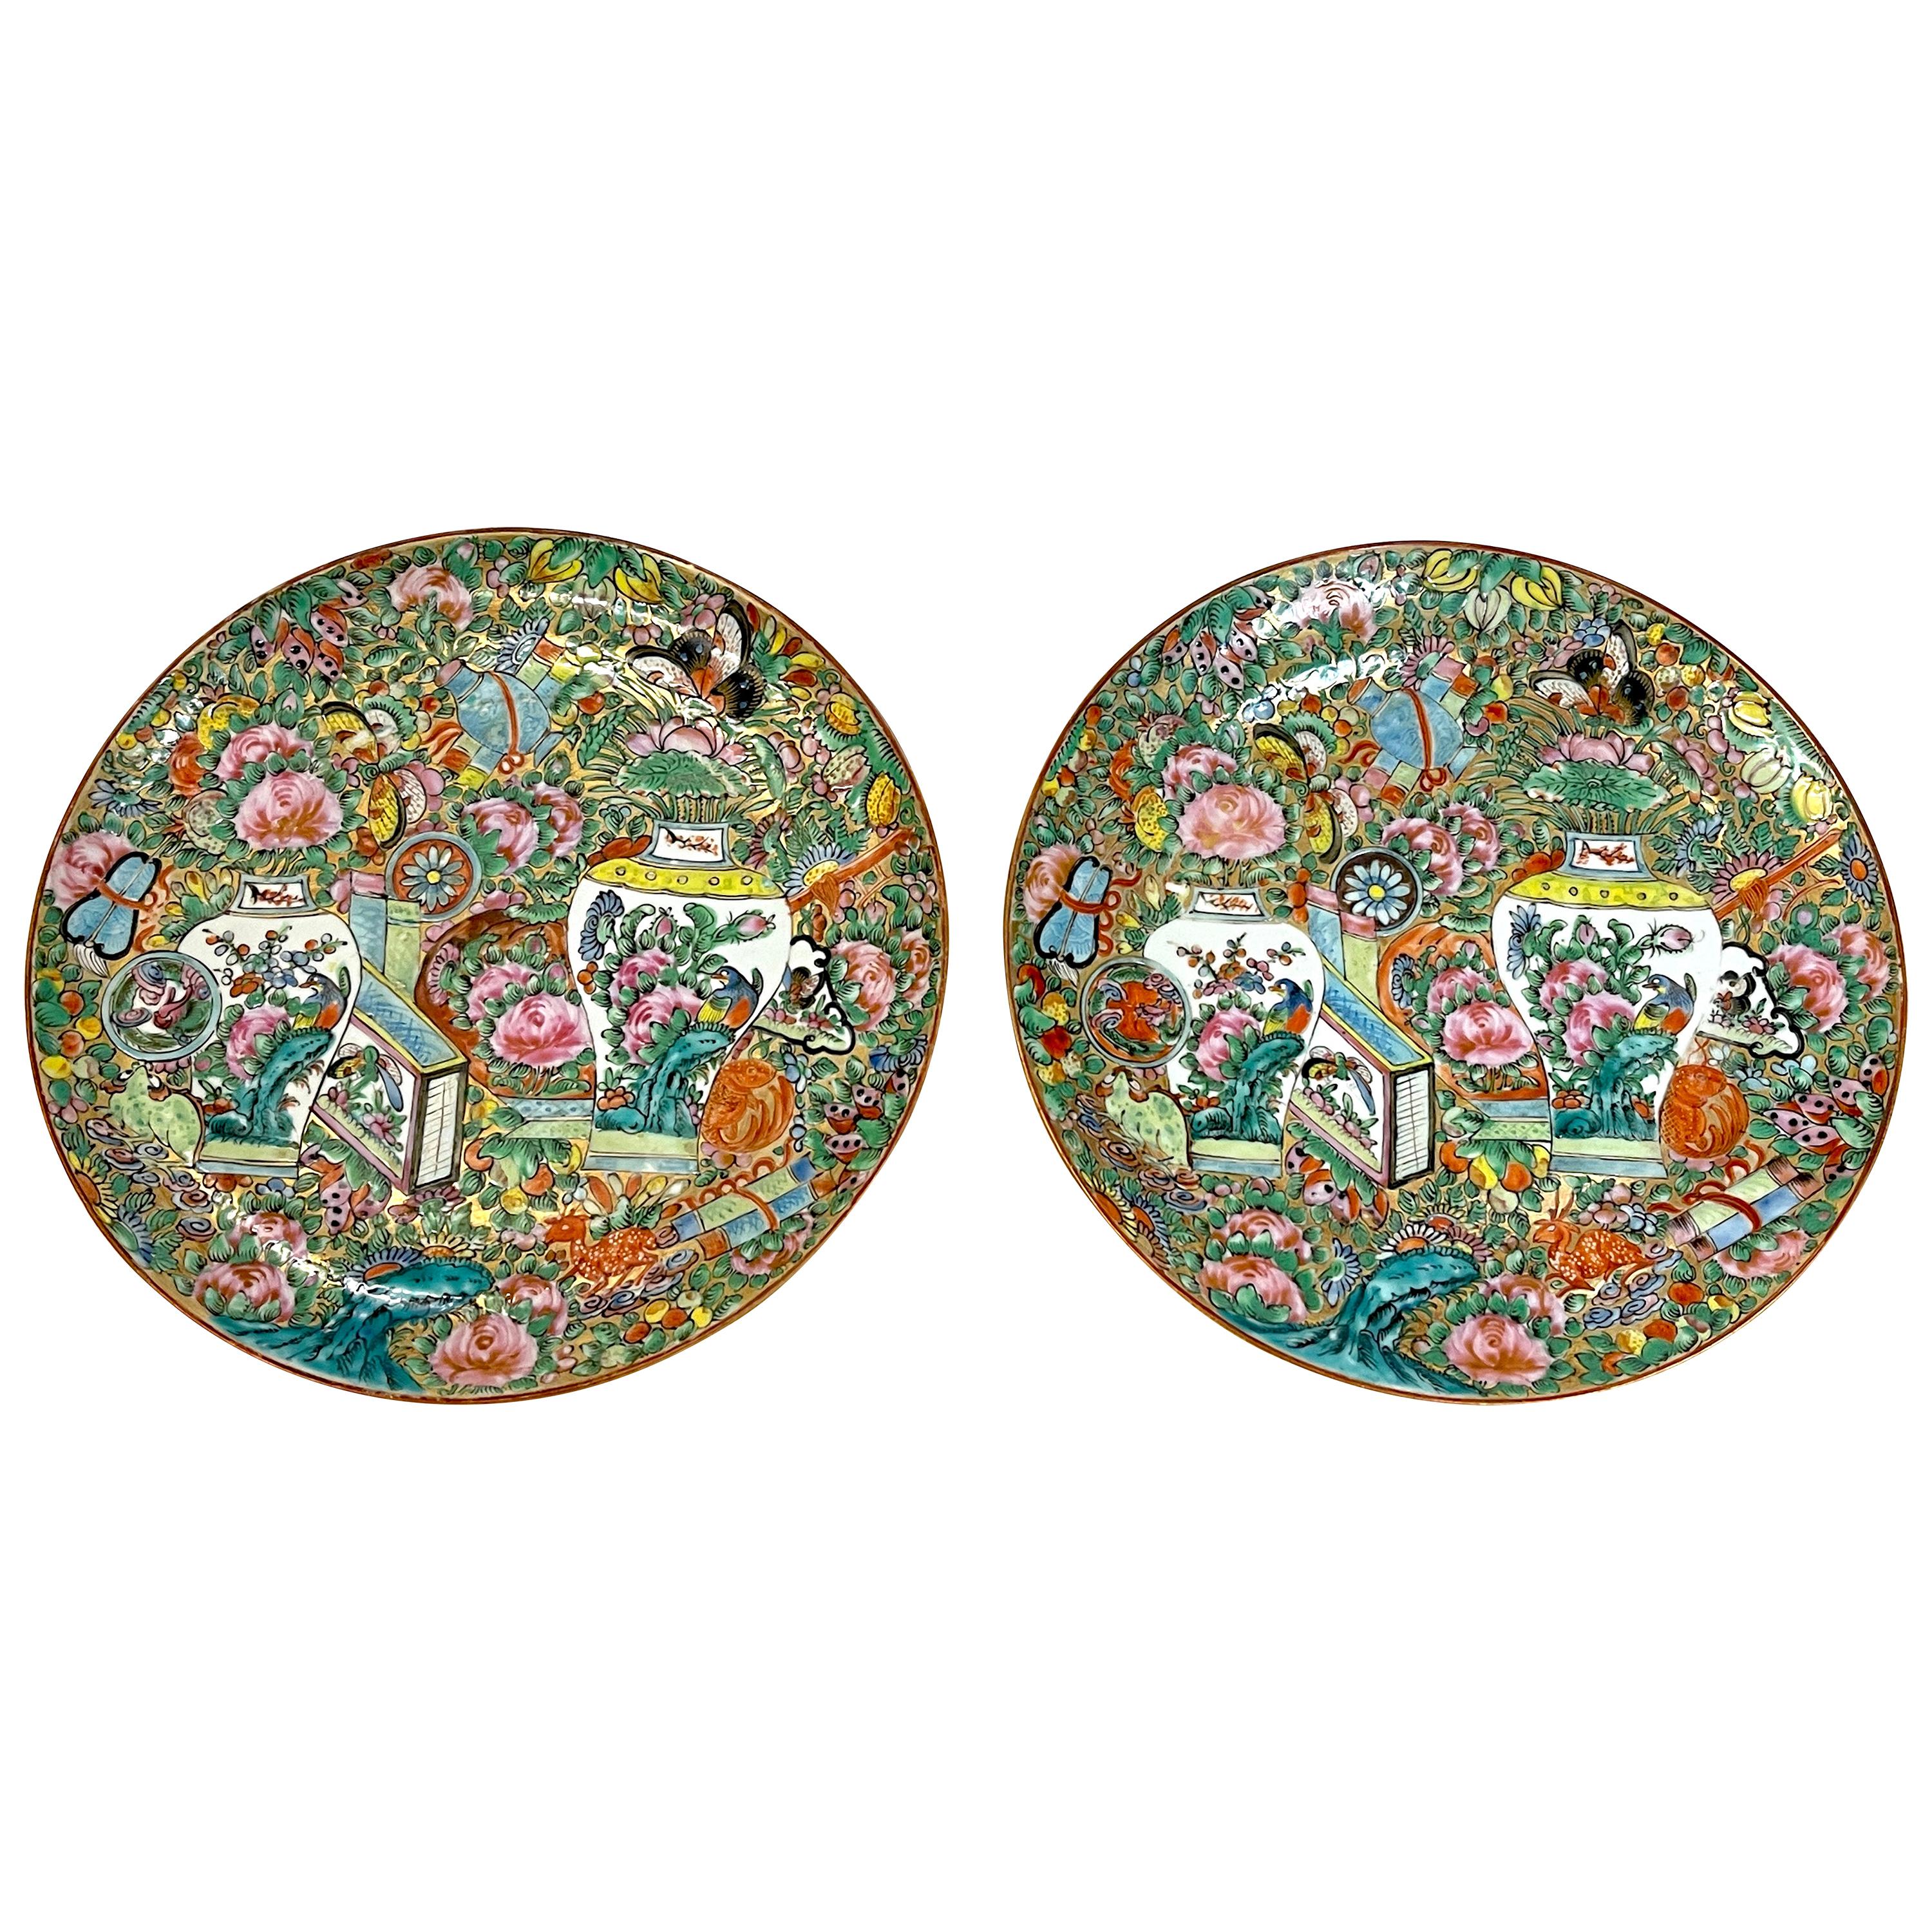 Pair of Chinese Export Famille Rose Urn & Garden Motif Plates